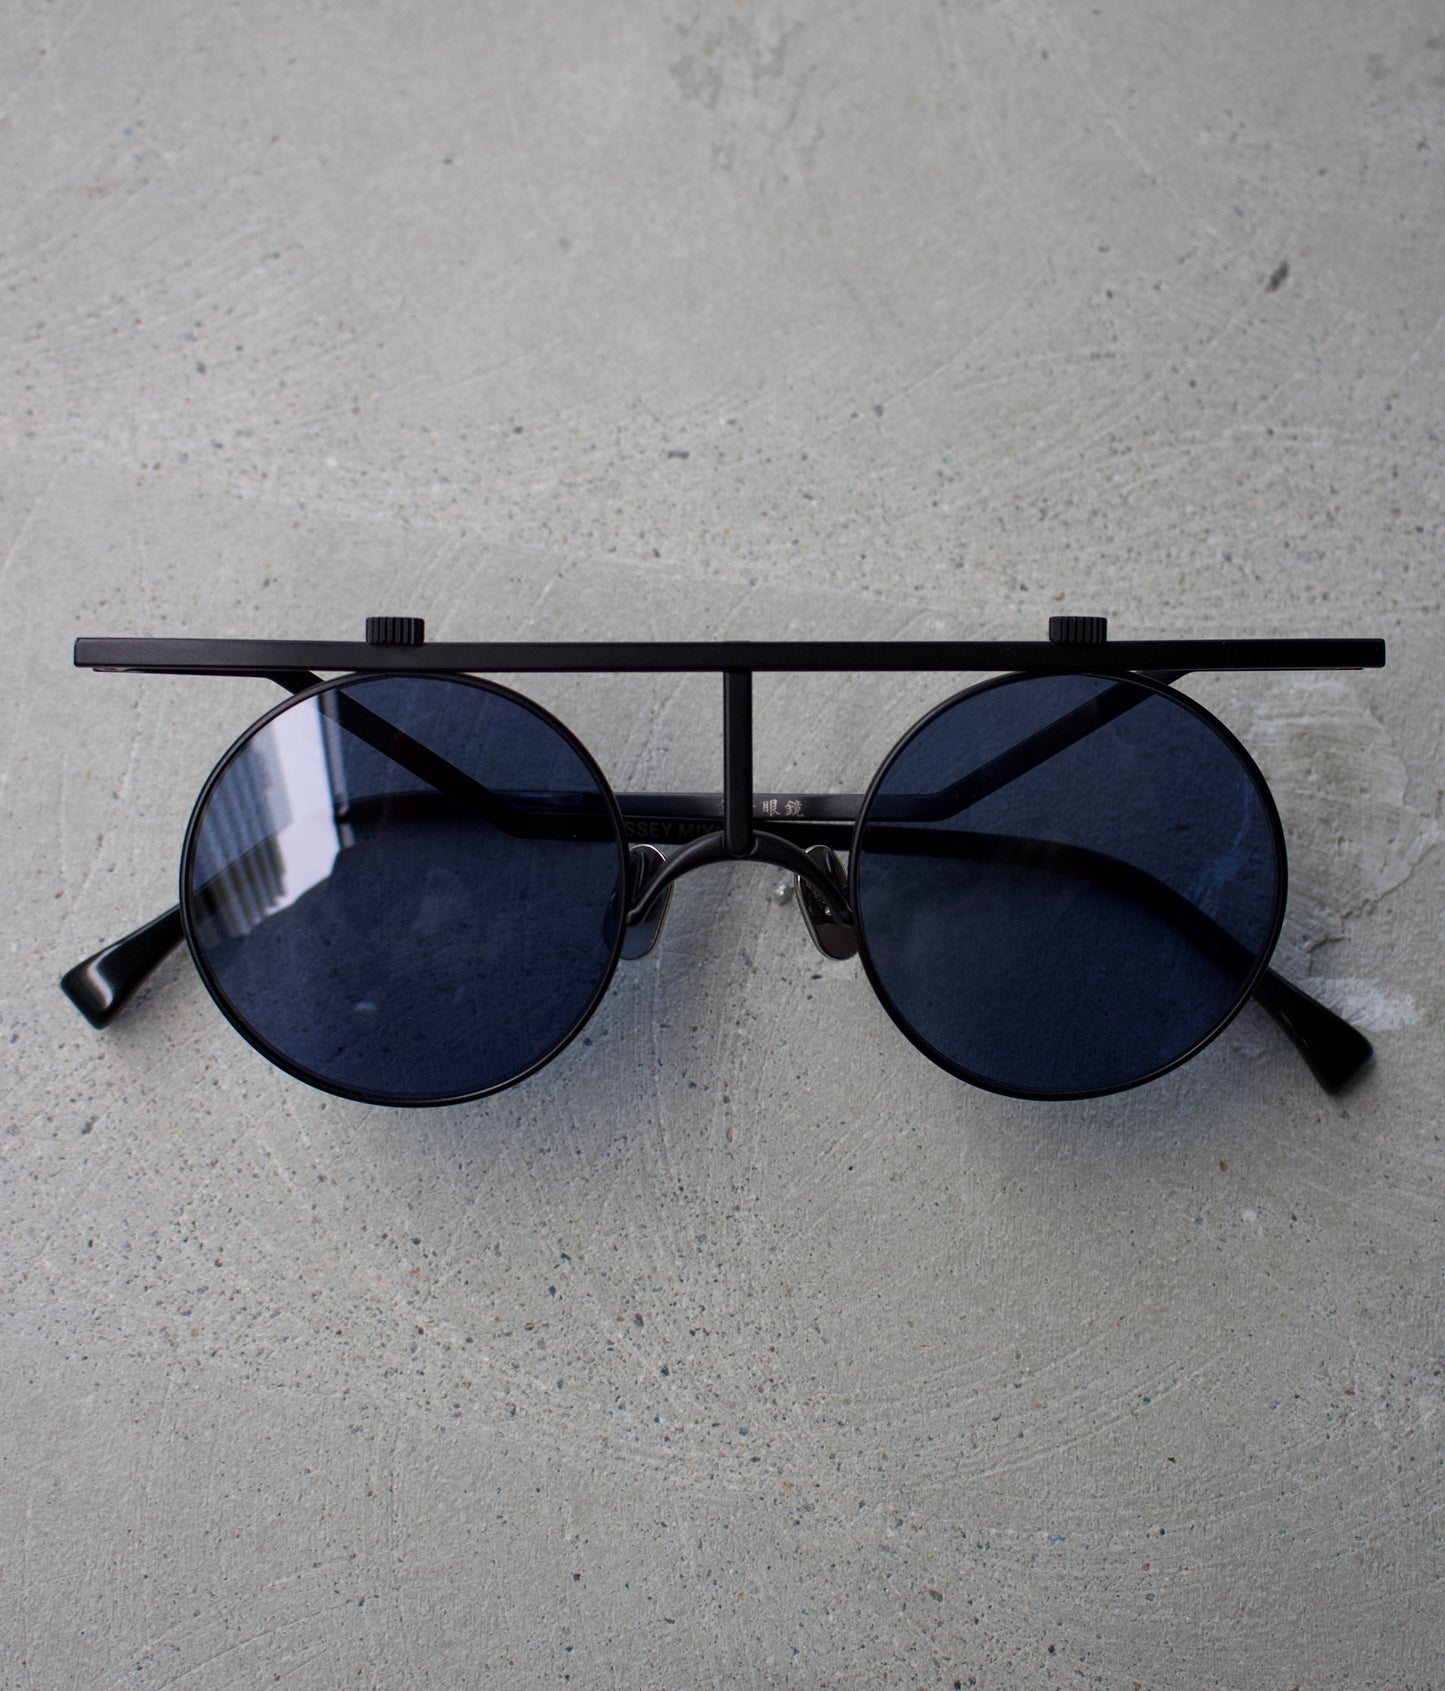 Issey Miyake “IM-101” ‘Basquiat’ Vintage 80s Re-product Sunglasses